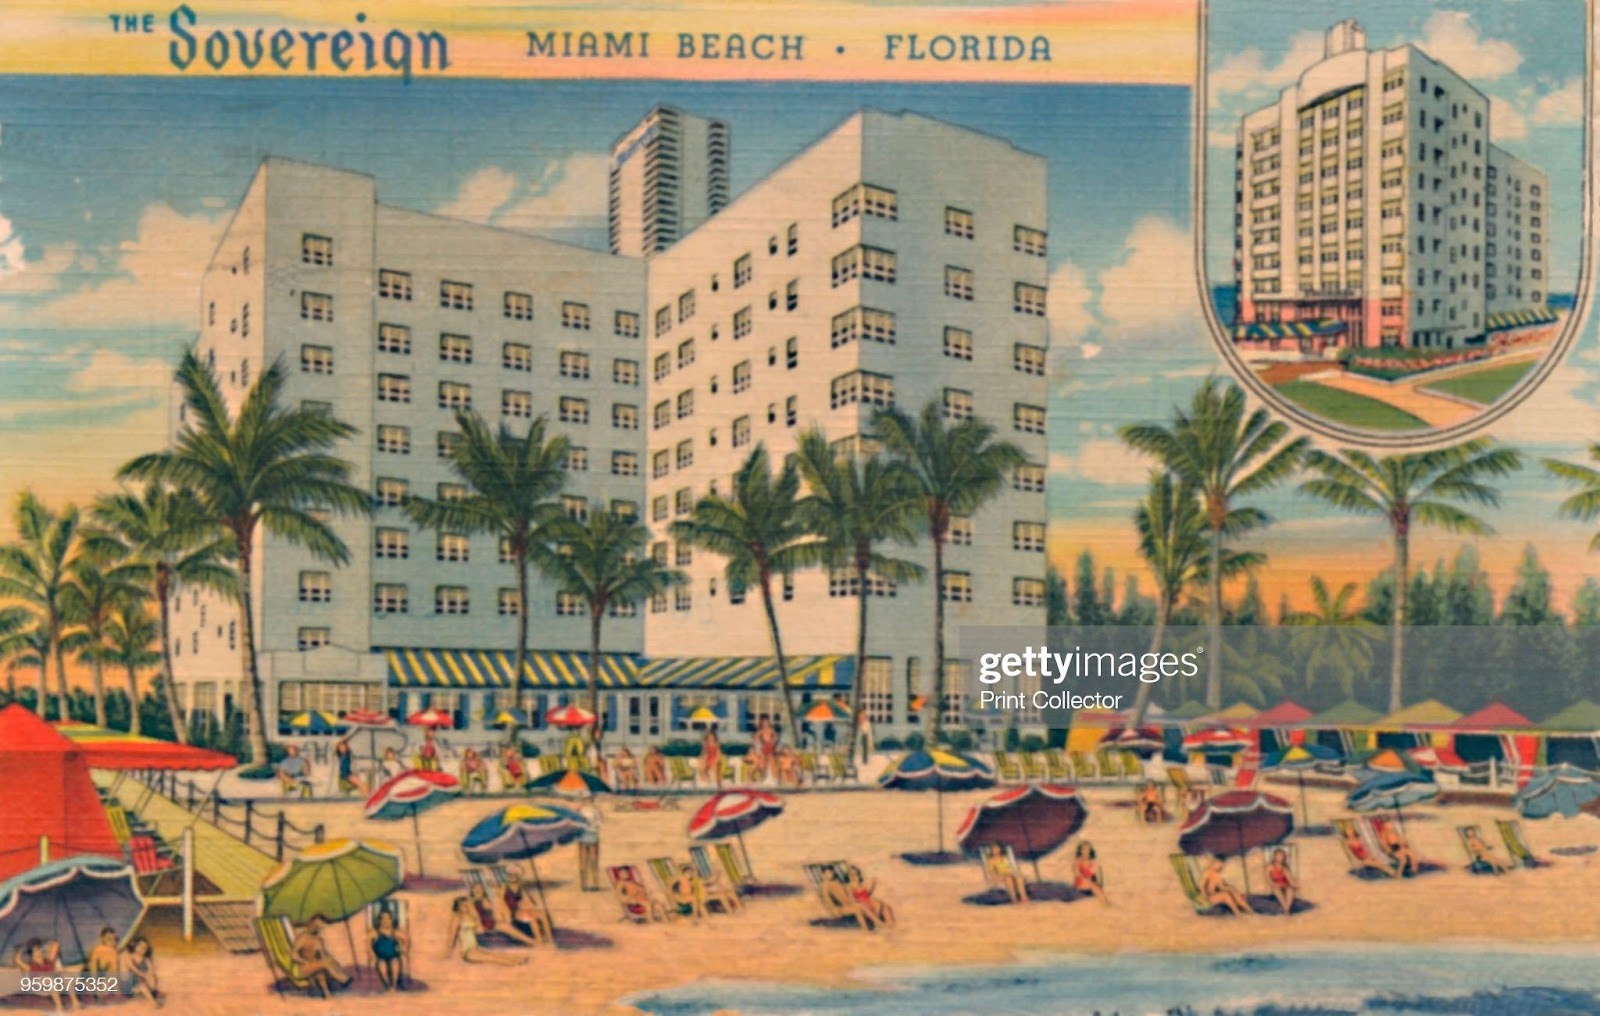 D:\Documenti\posts\posts\Miami\foto\ateriale pubblicitario\the-sovereign-miami-beach-florida-circa-1940s-genuine-curteichchicago-picture-id959875352.jpg